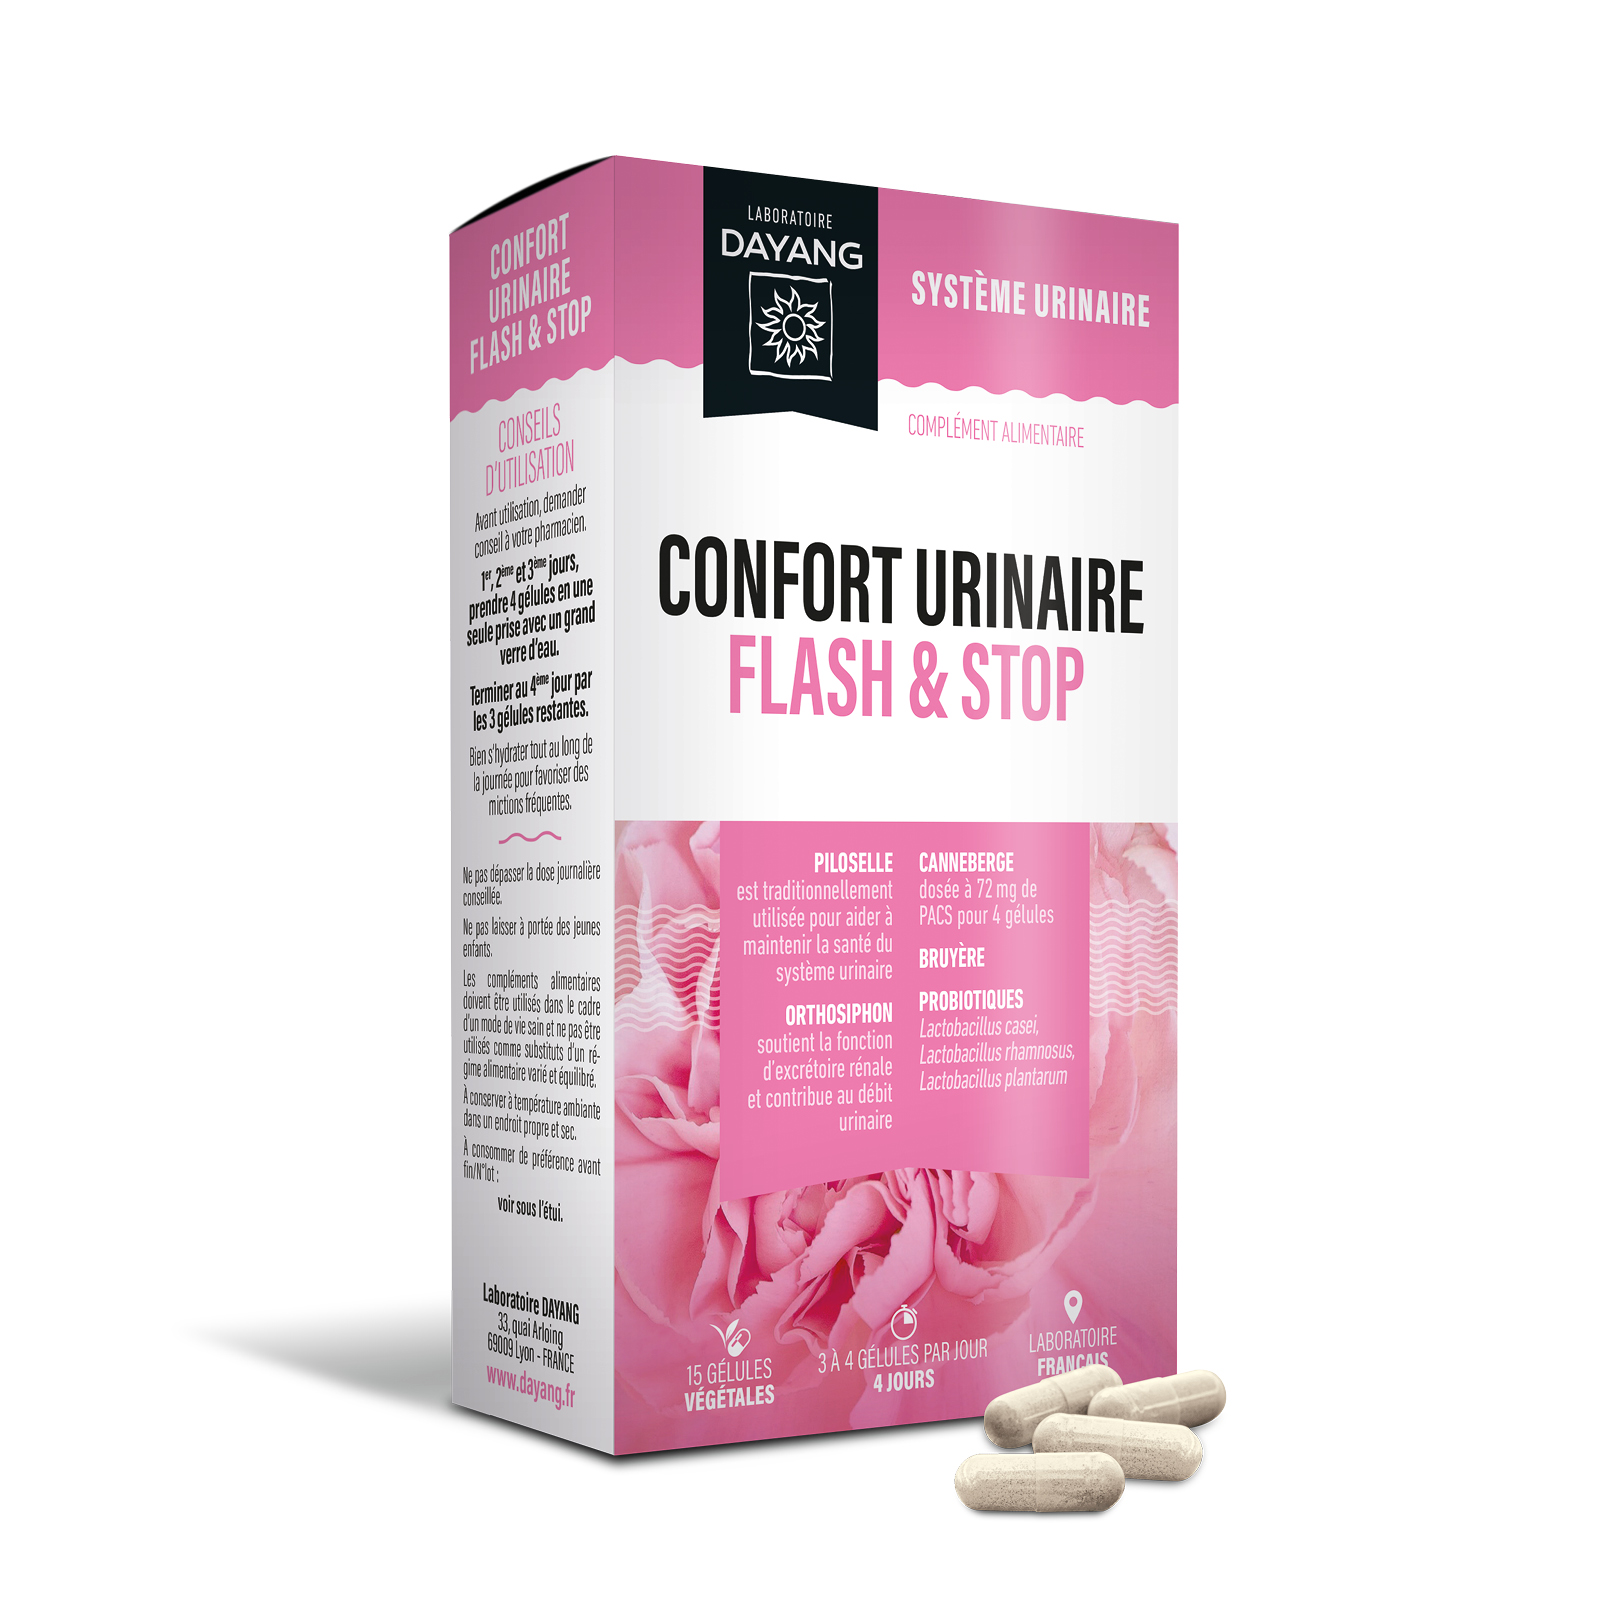 Confort urinaire flash & stop